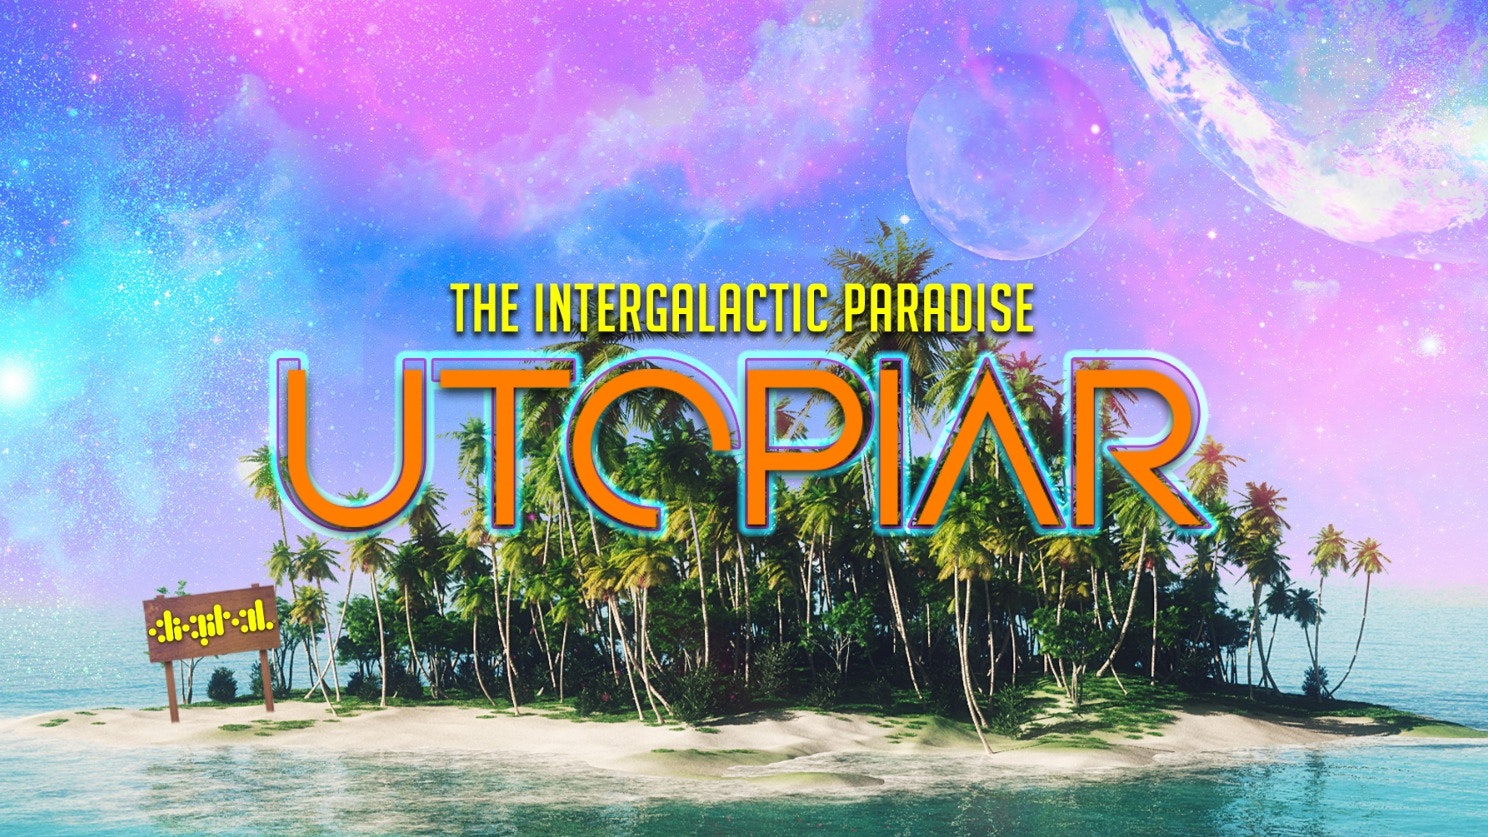 UTOPIAR | THE INTERGALACTIC PARADISE 🌈🏖🌴  | 21st MAY